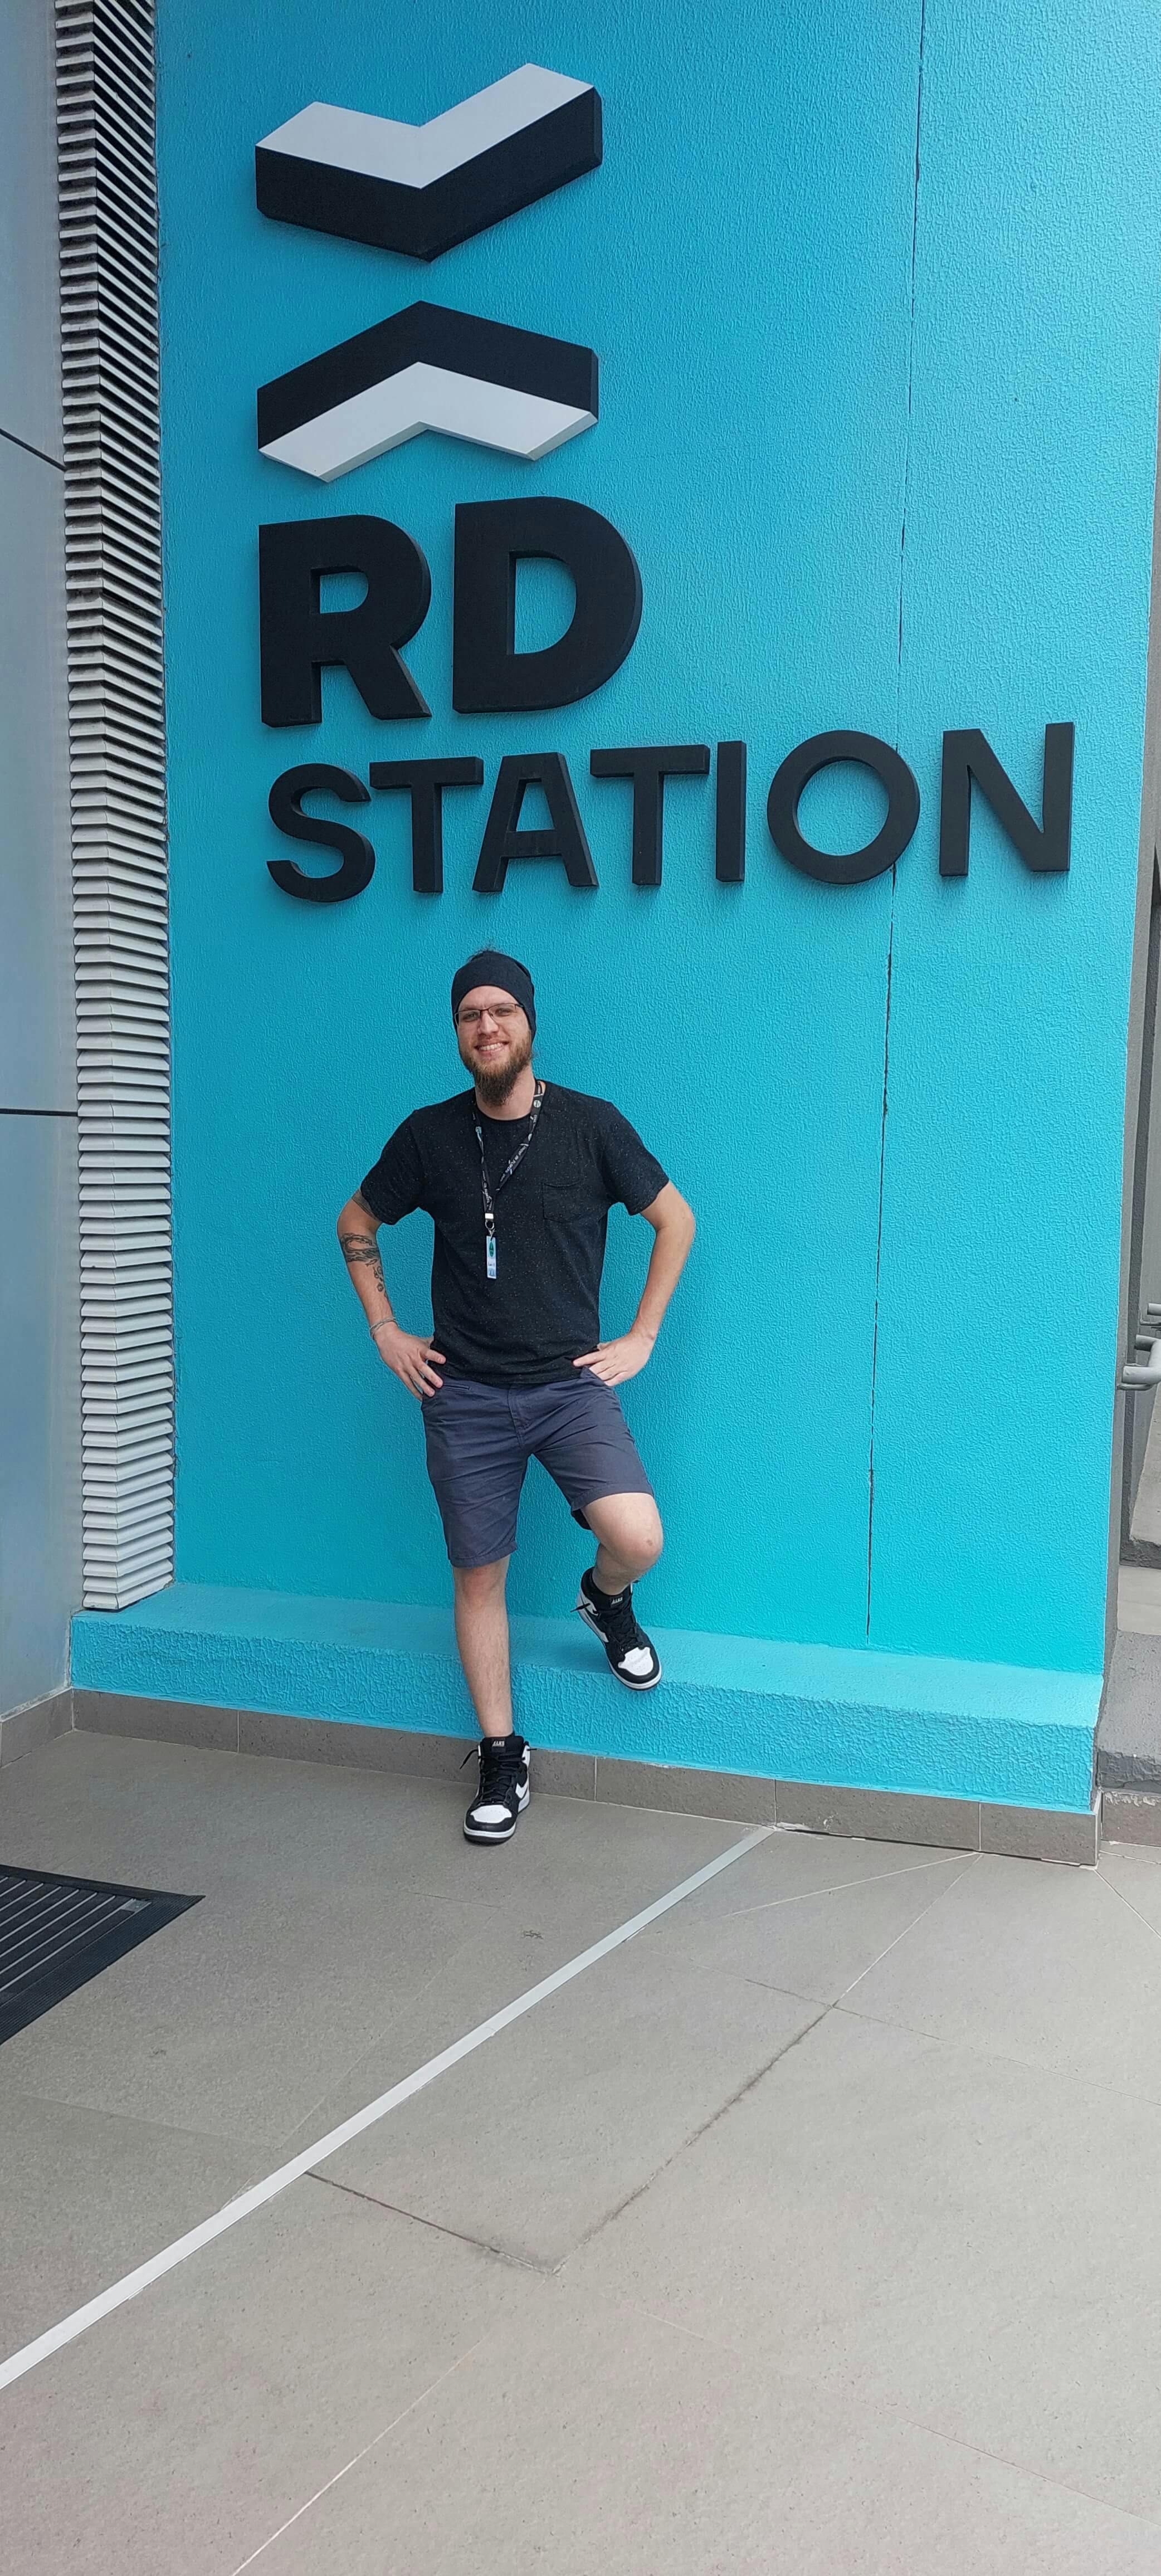 eu na fachada da empresa rd station